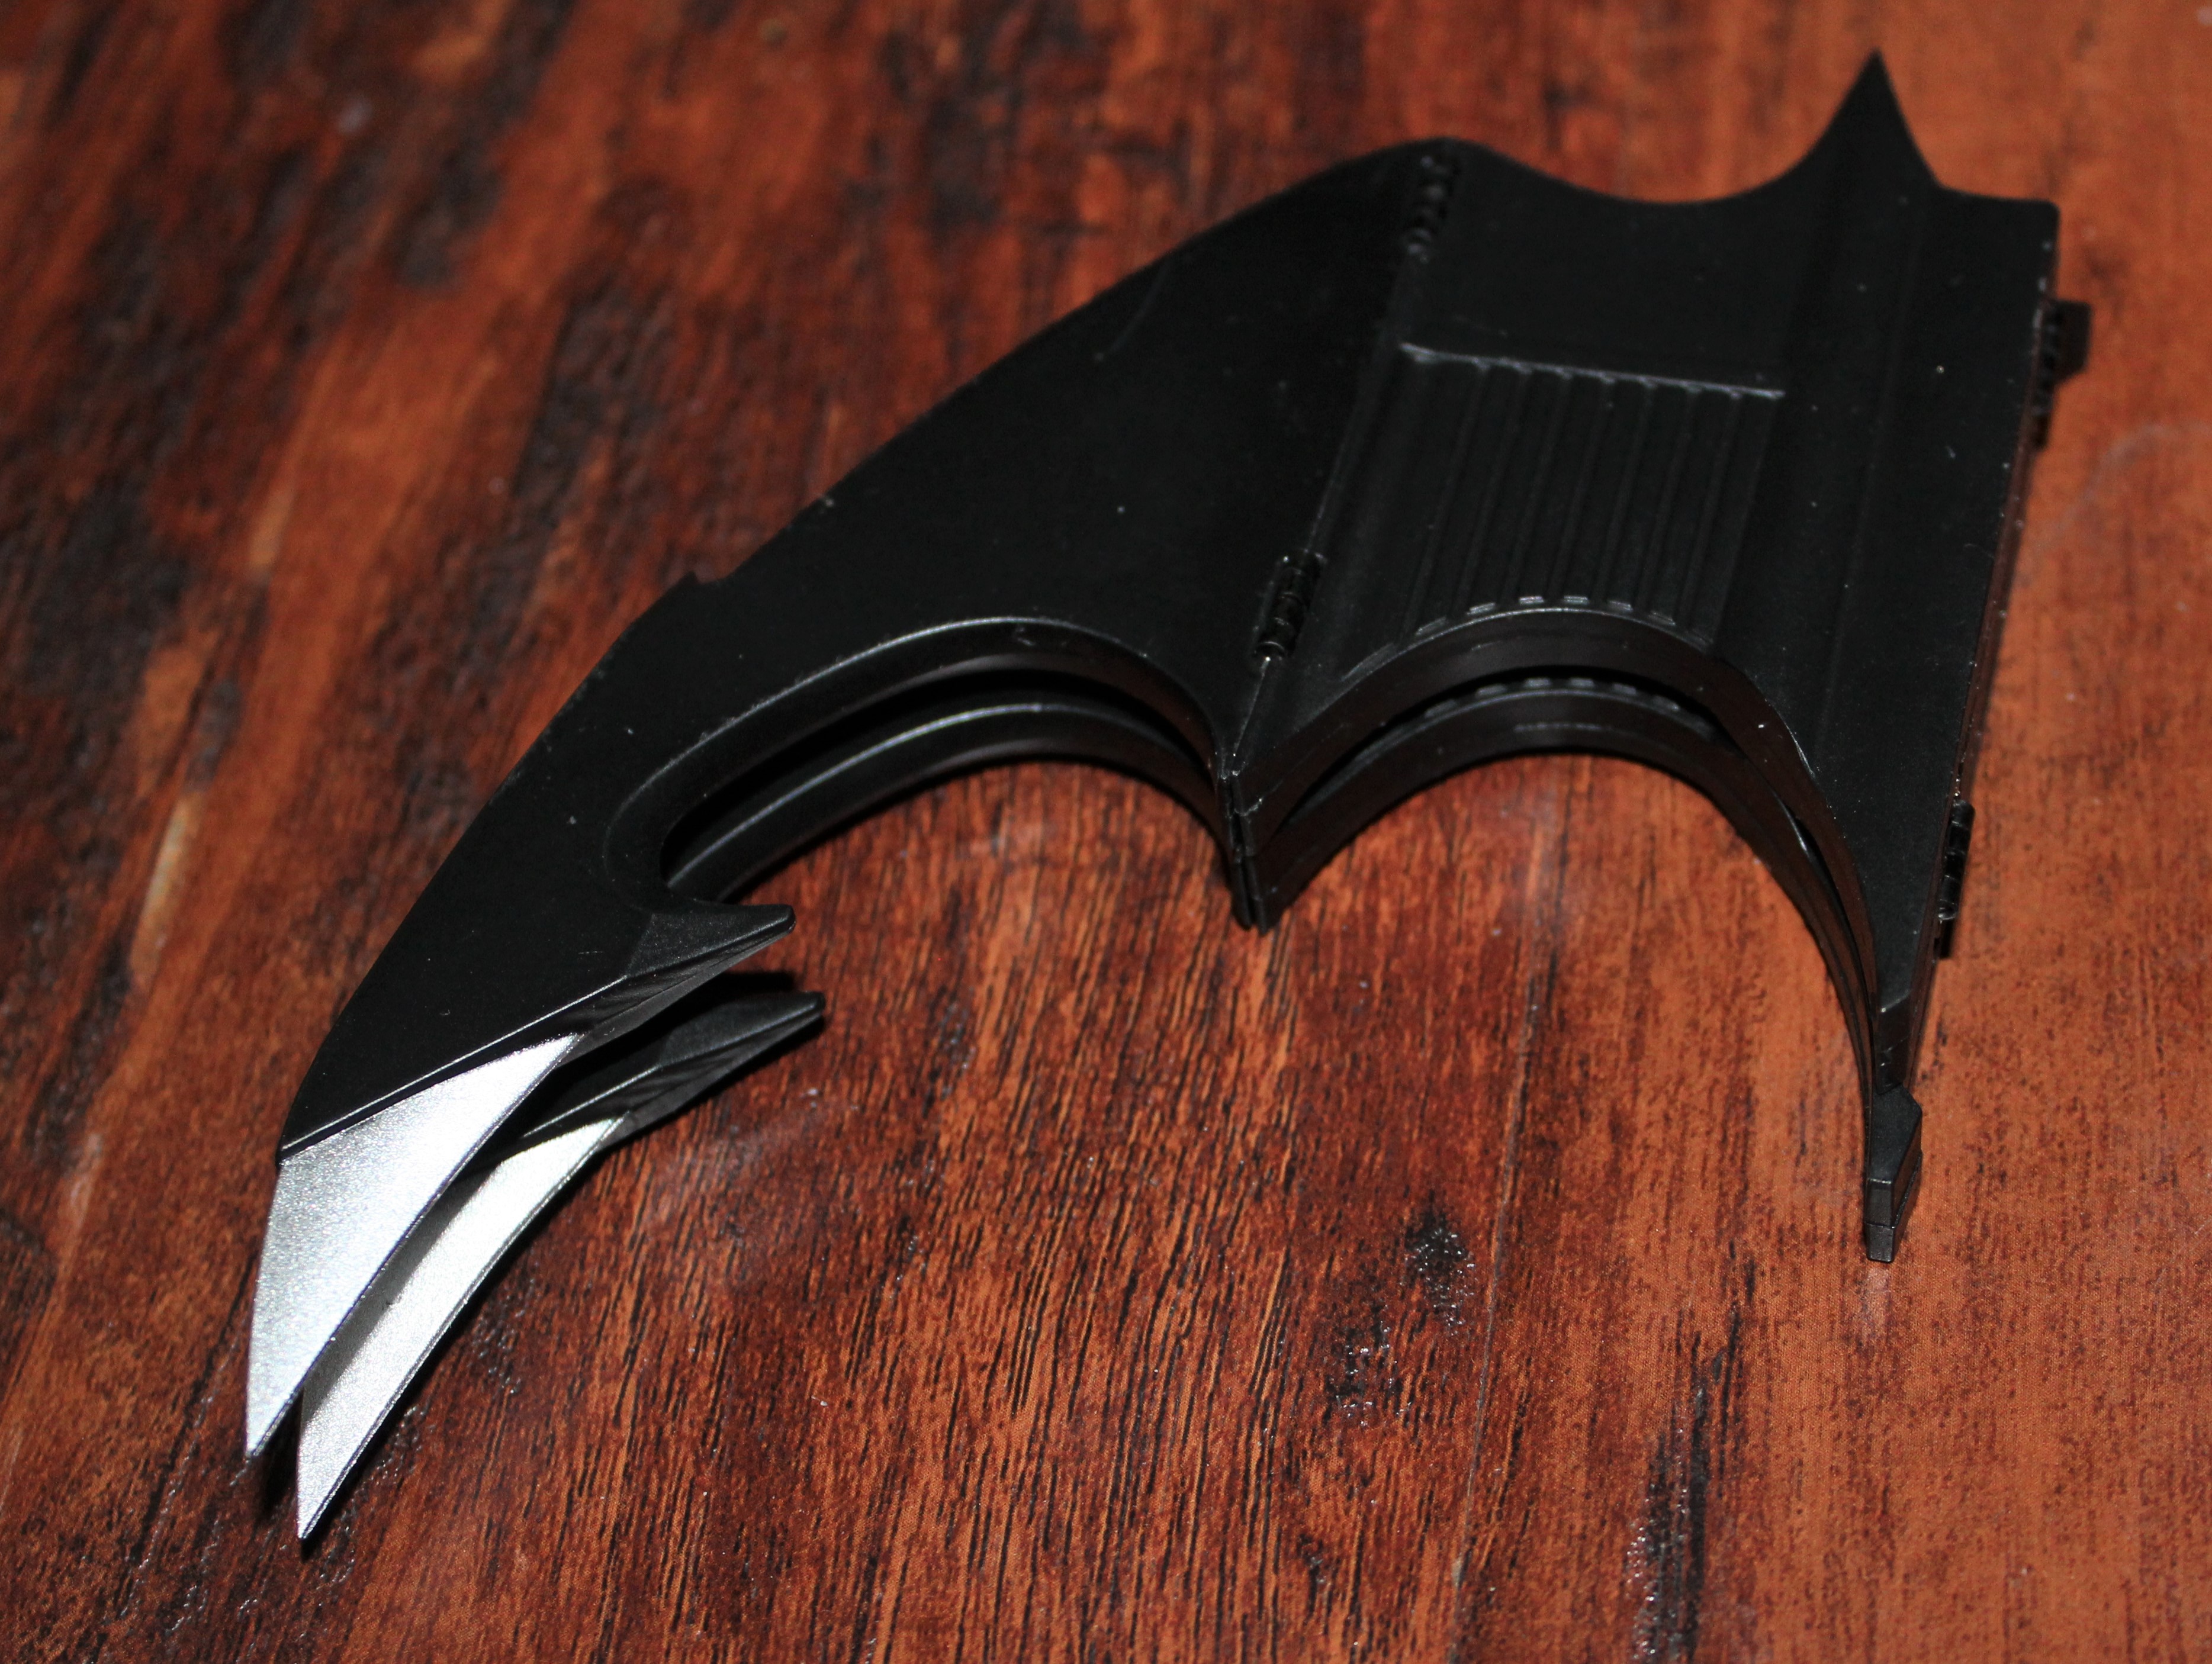 Batarang half-folded